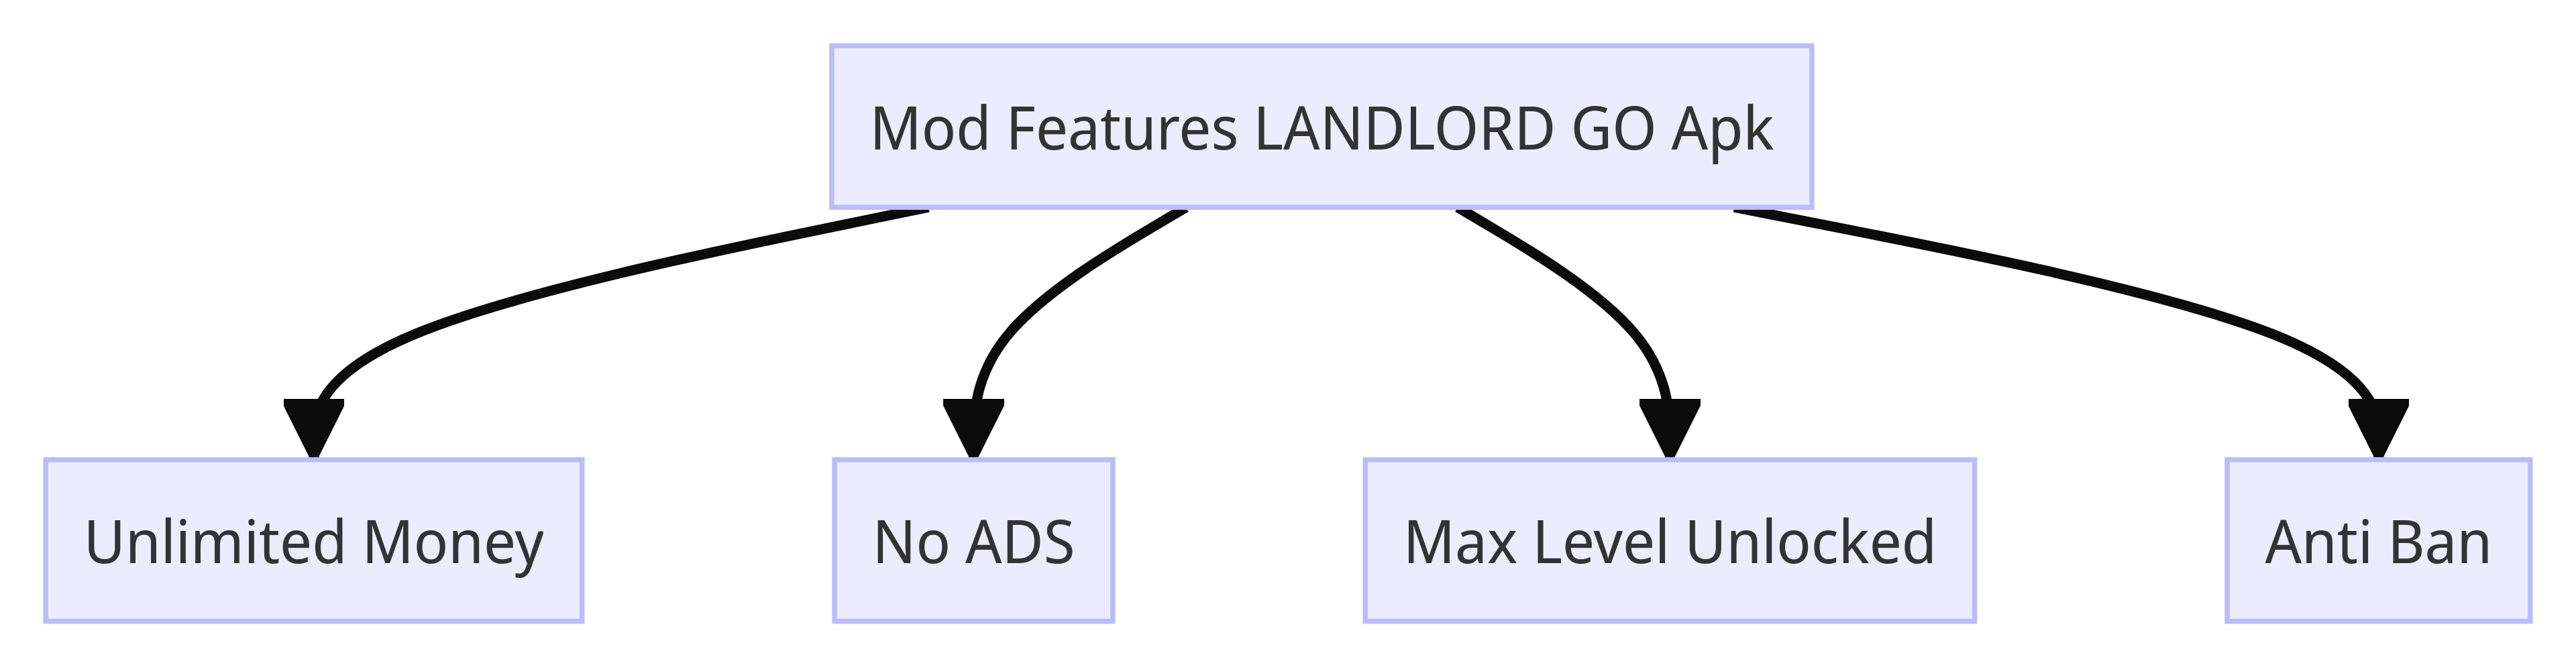 Mod Features LANDLORD GO Apk